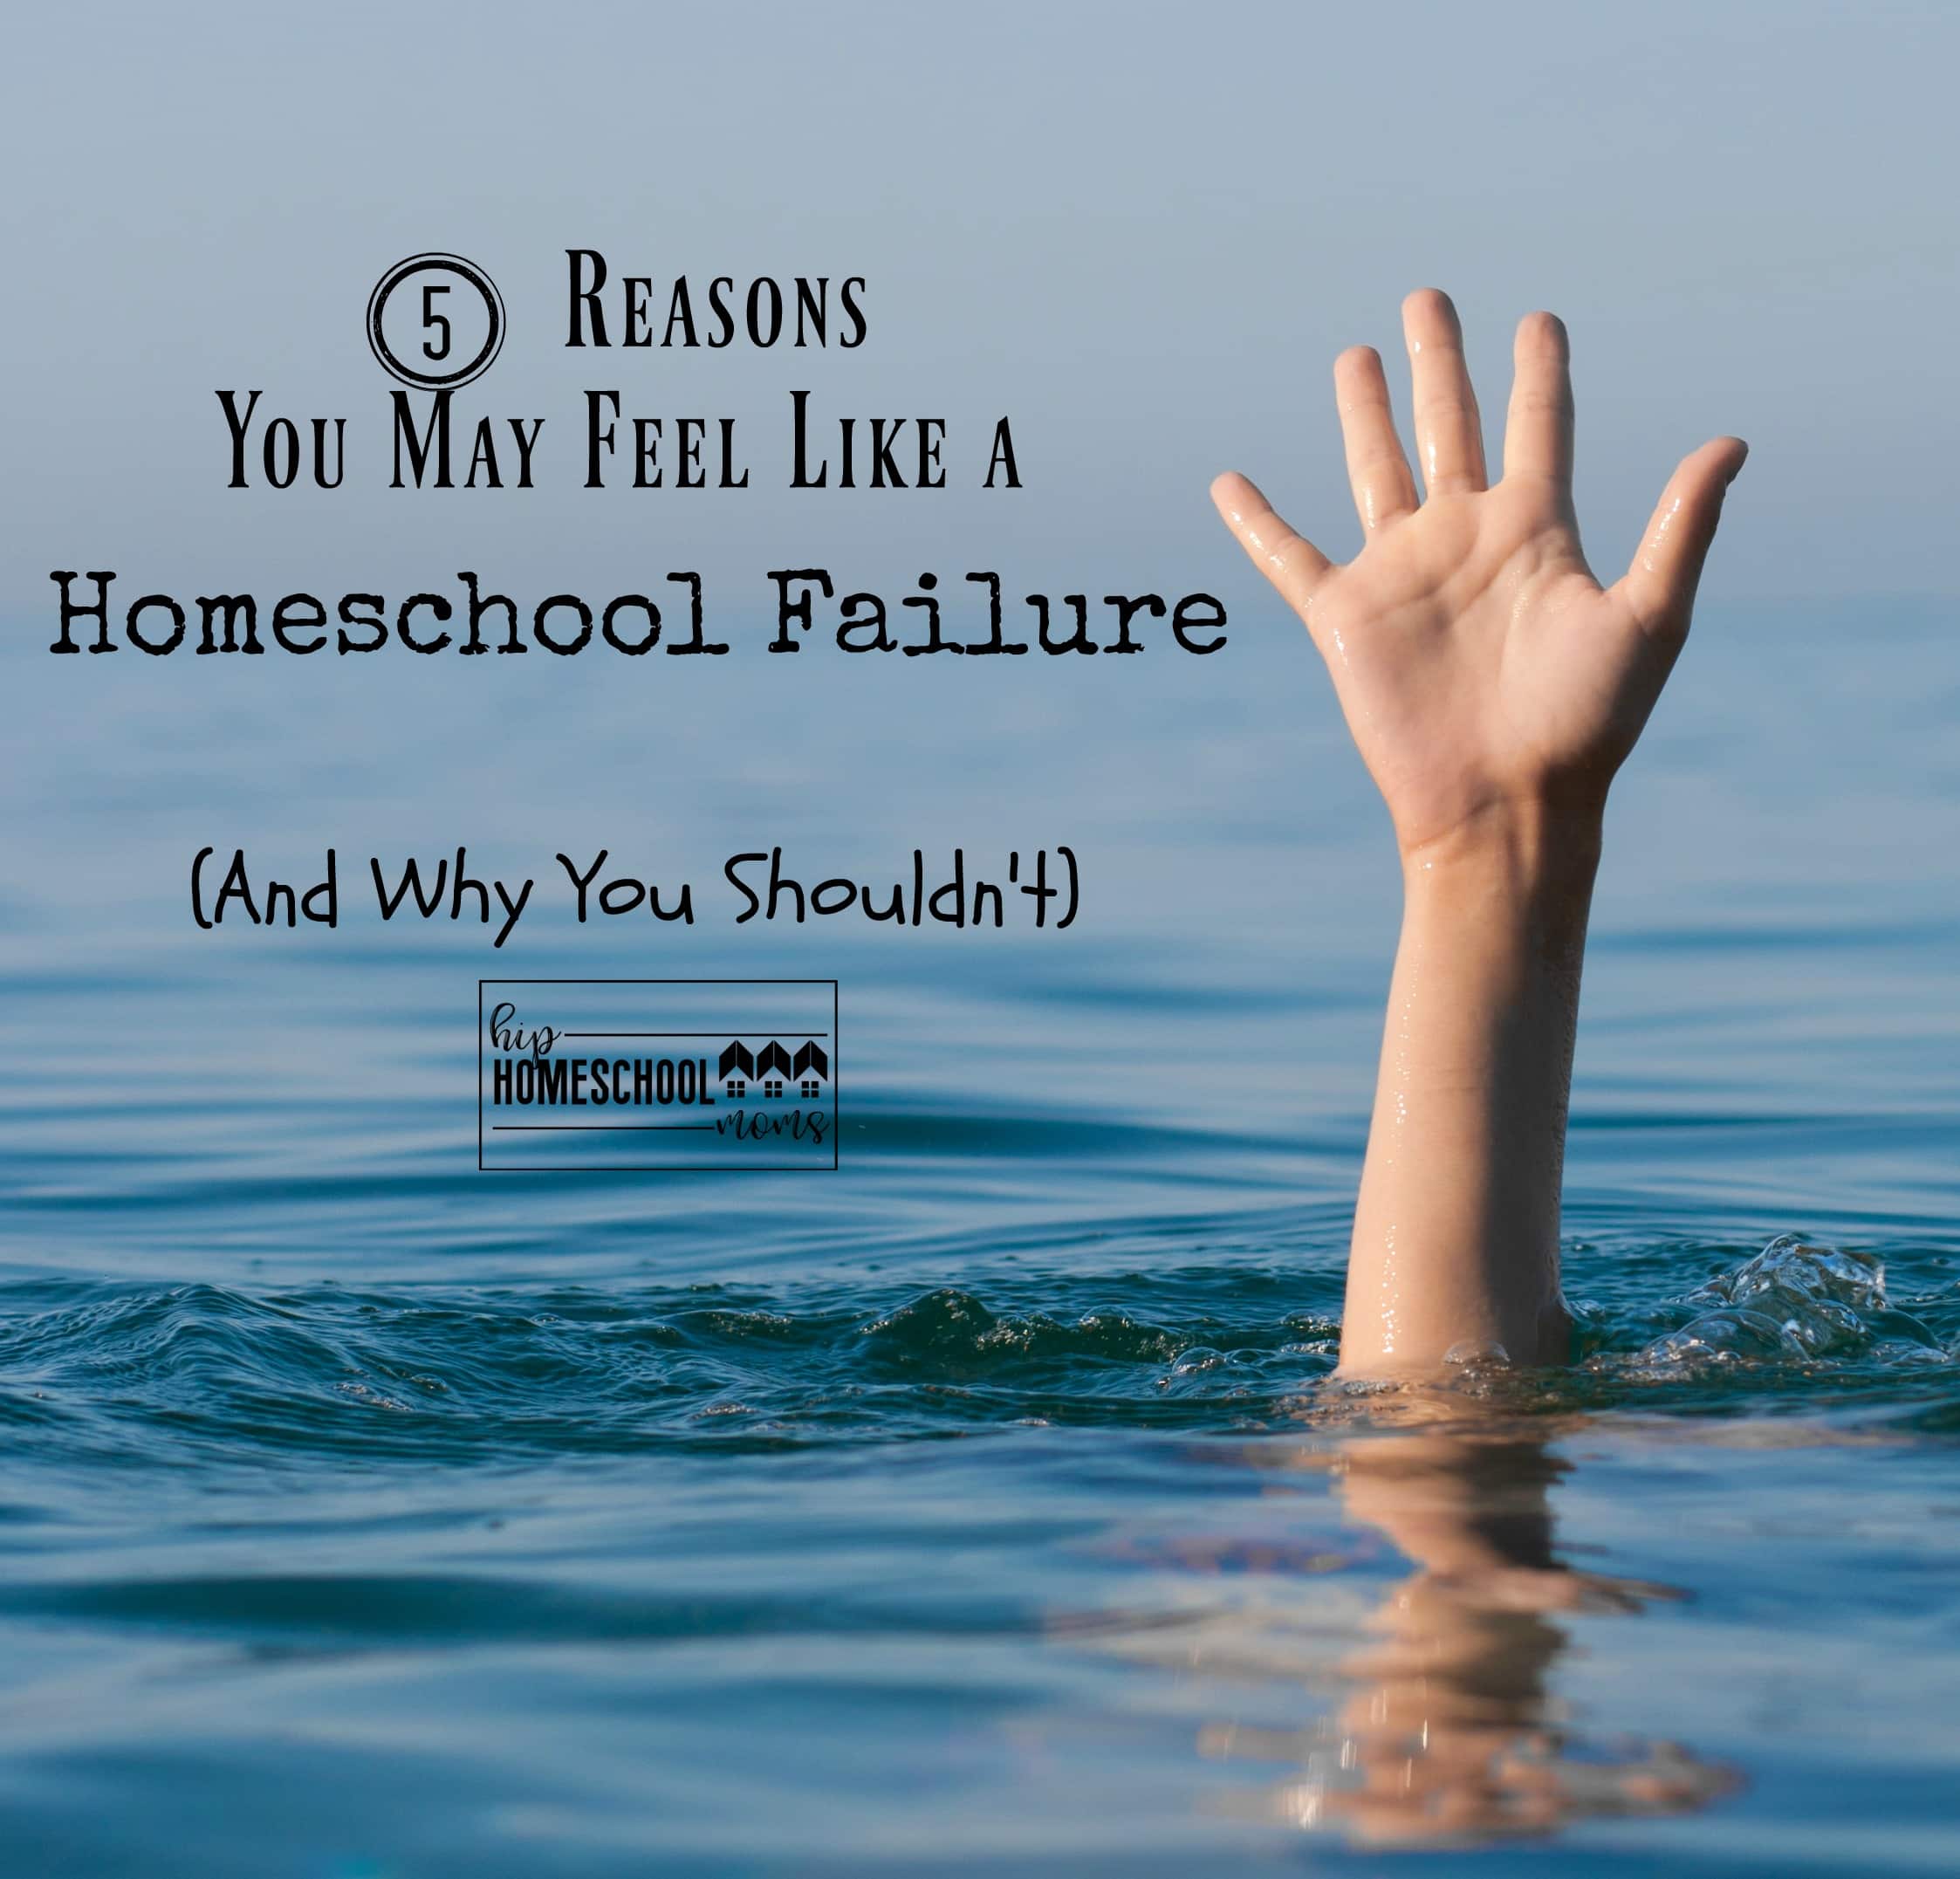 5 Reasons You May Feel Like a Homeschool Failure